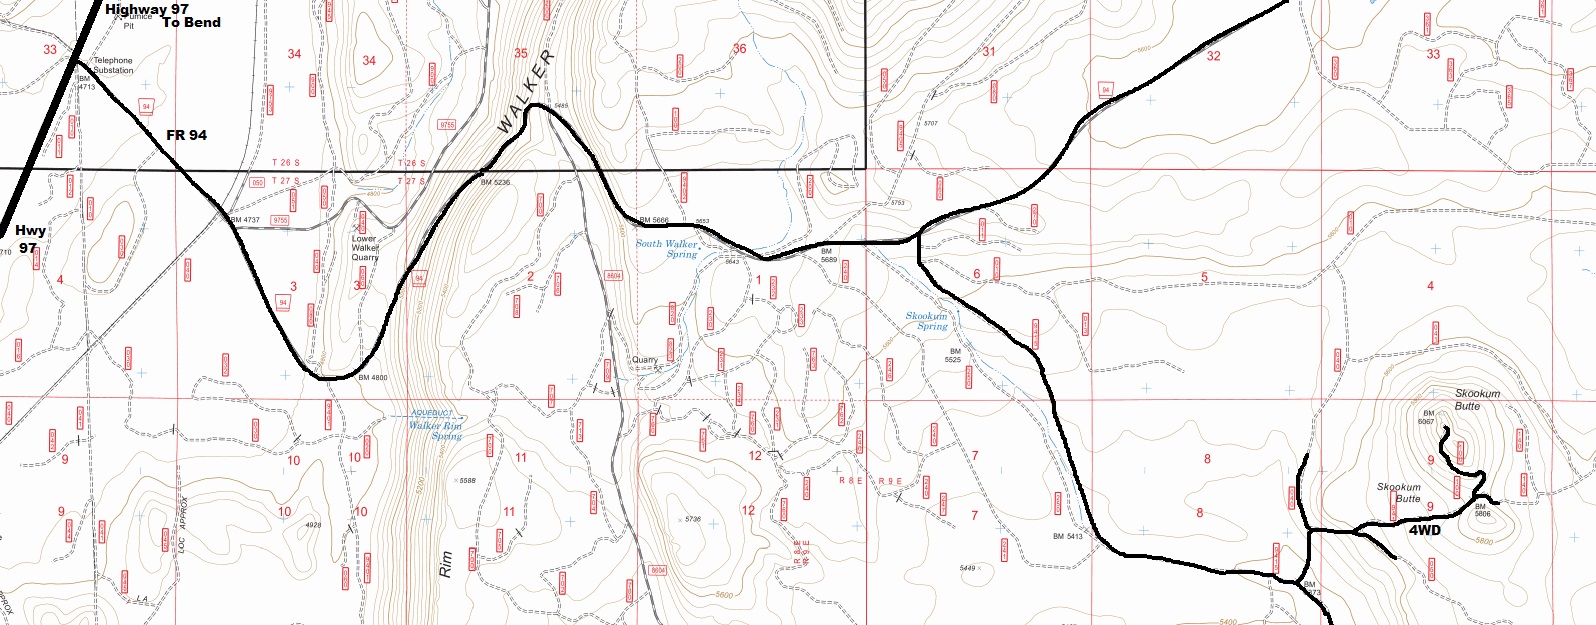 Skookum Butte map